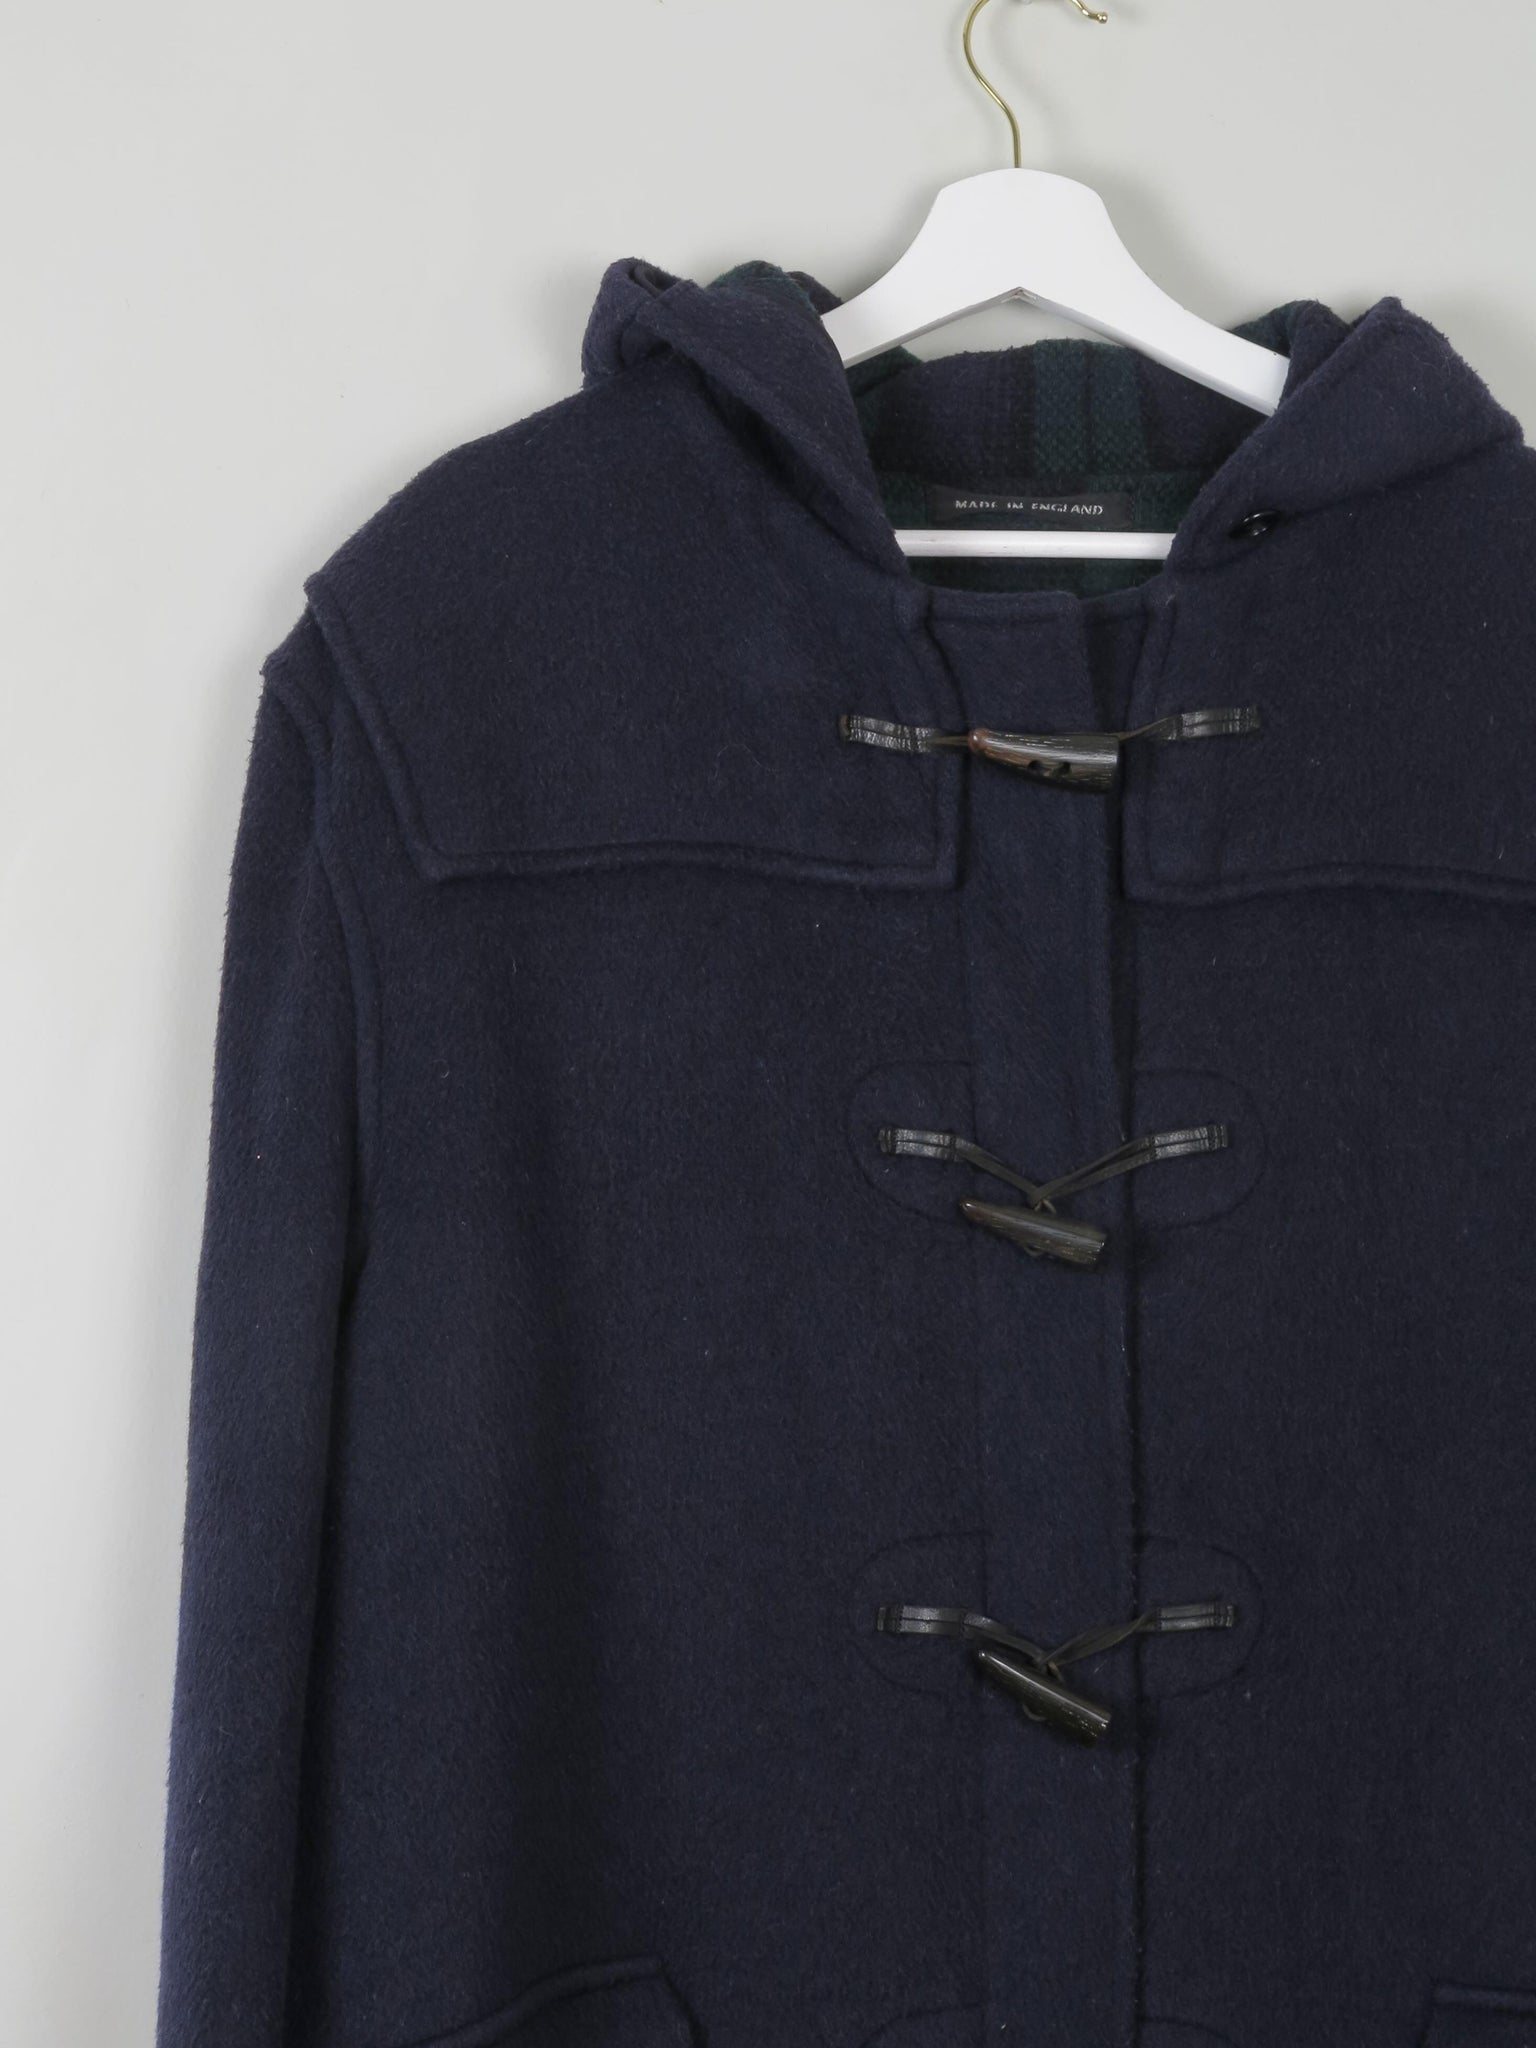 Men's Navy Wool Gloverall Duffle Coat 44/L/XL - The Harlequin